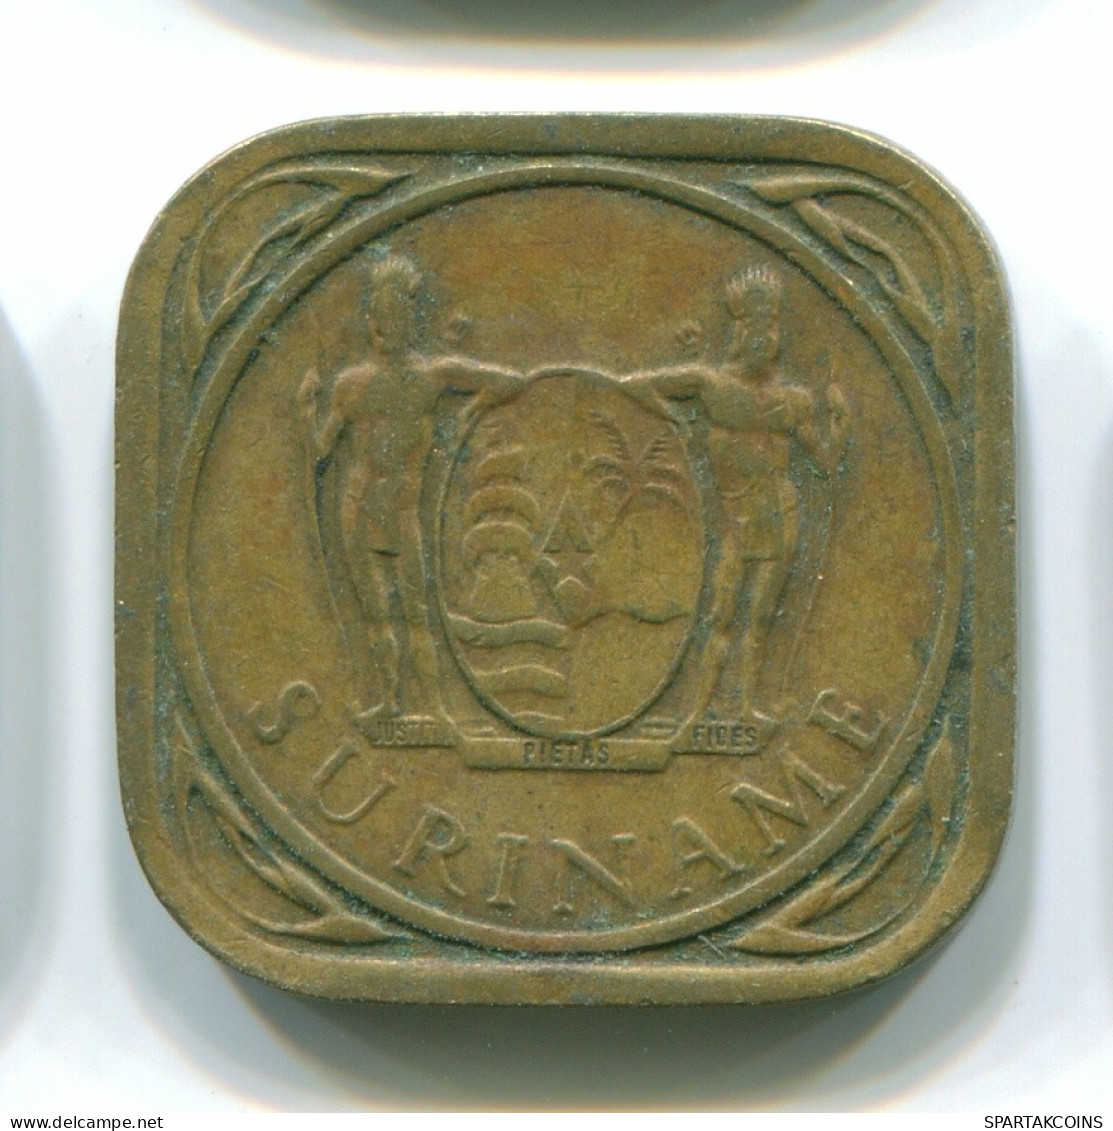 5 CENTS 1966 SURINAME Netherlands Nickel-Brass Colonial Coin #S12763.U.A - Surinam 1975 - ...